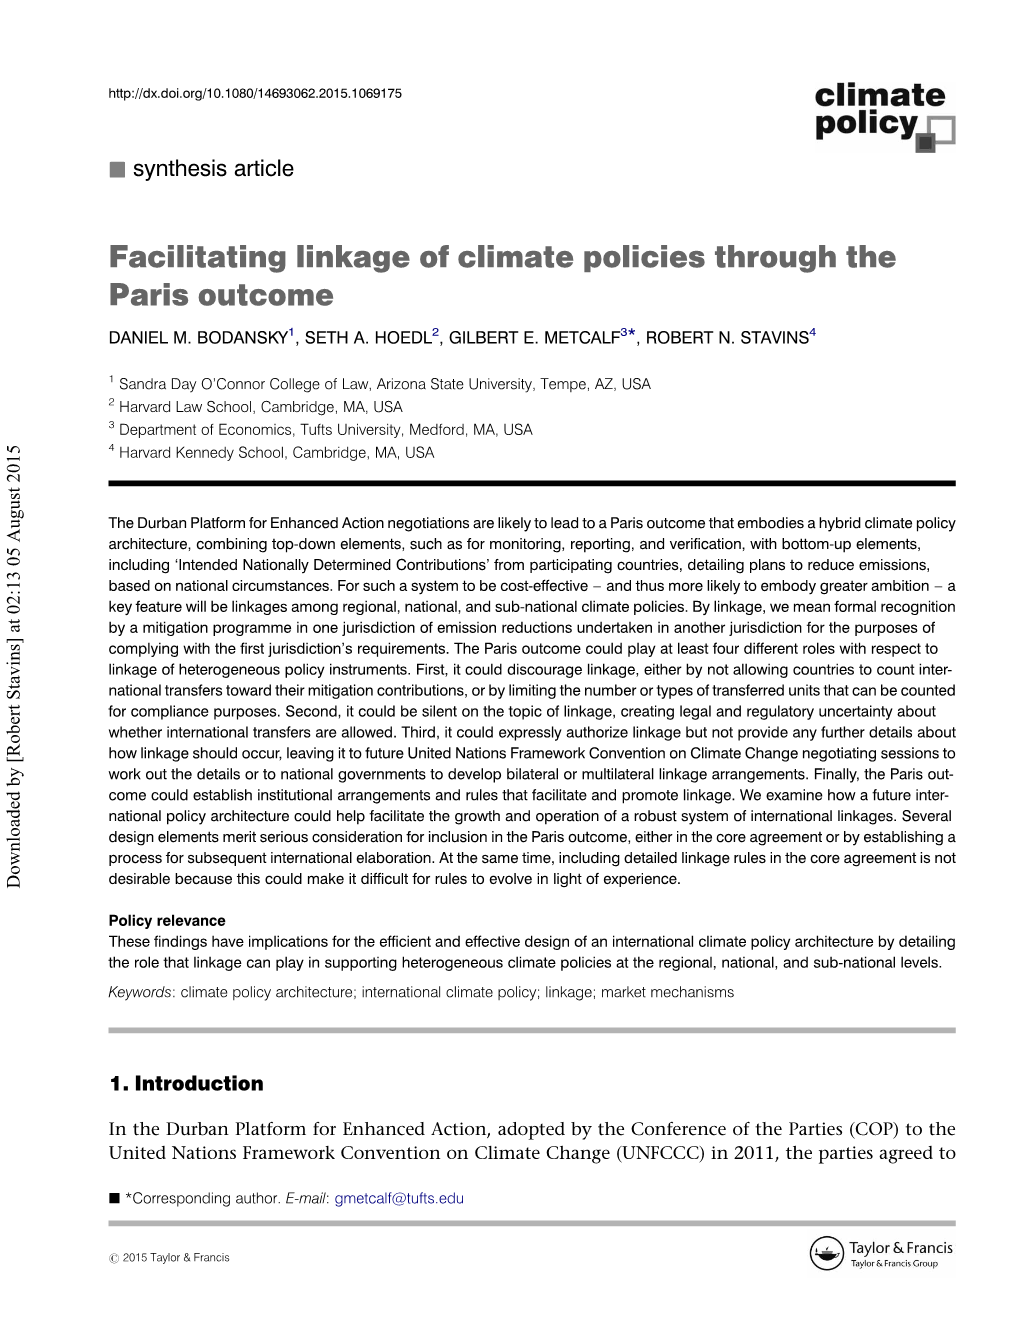 Facilitating Linkage of Climate Policies Through the Paris Outcome